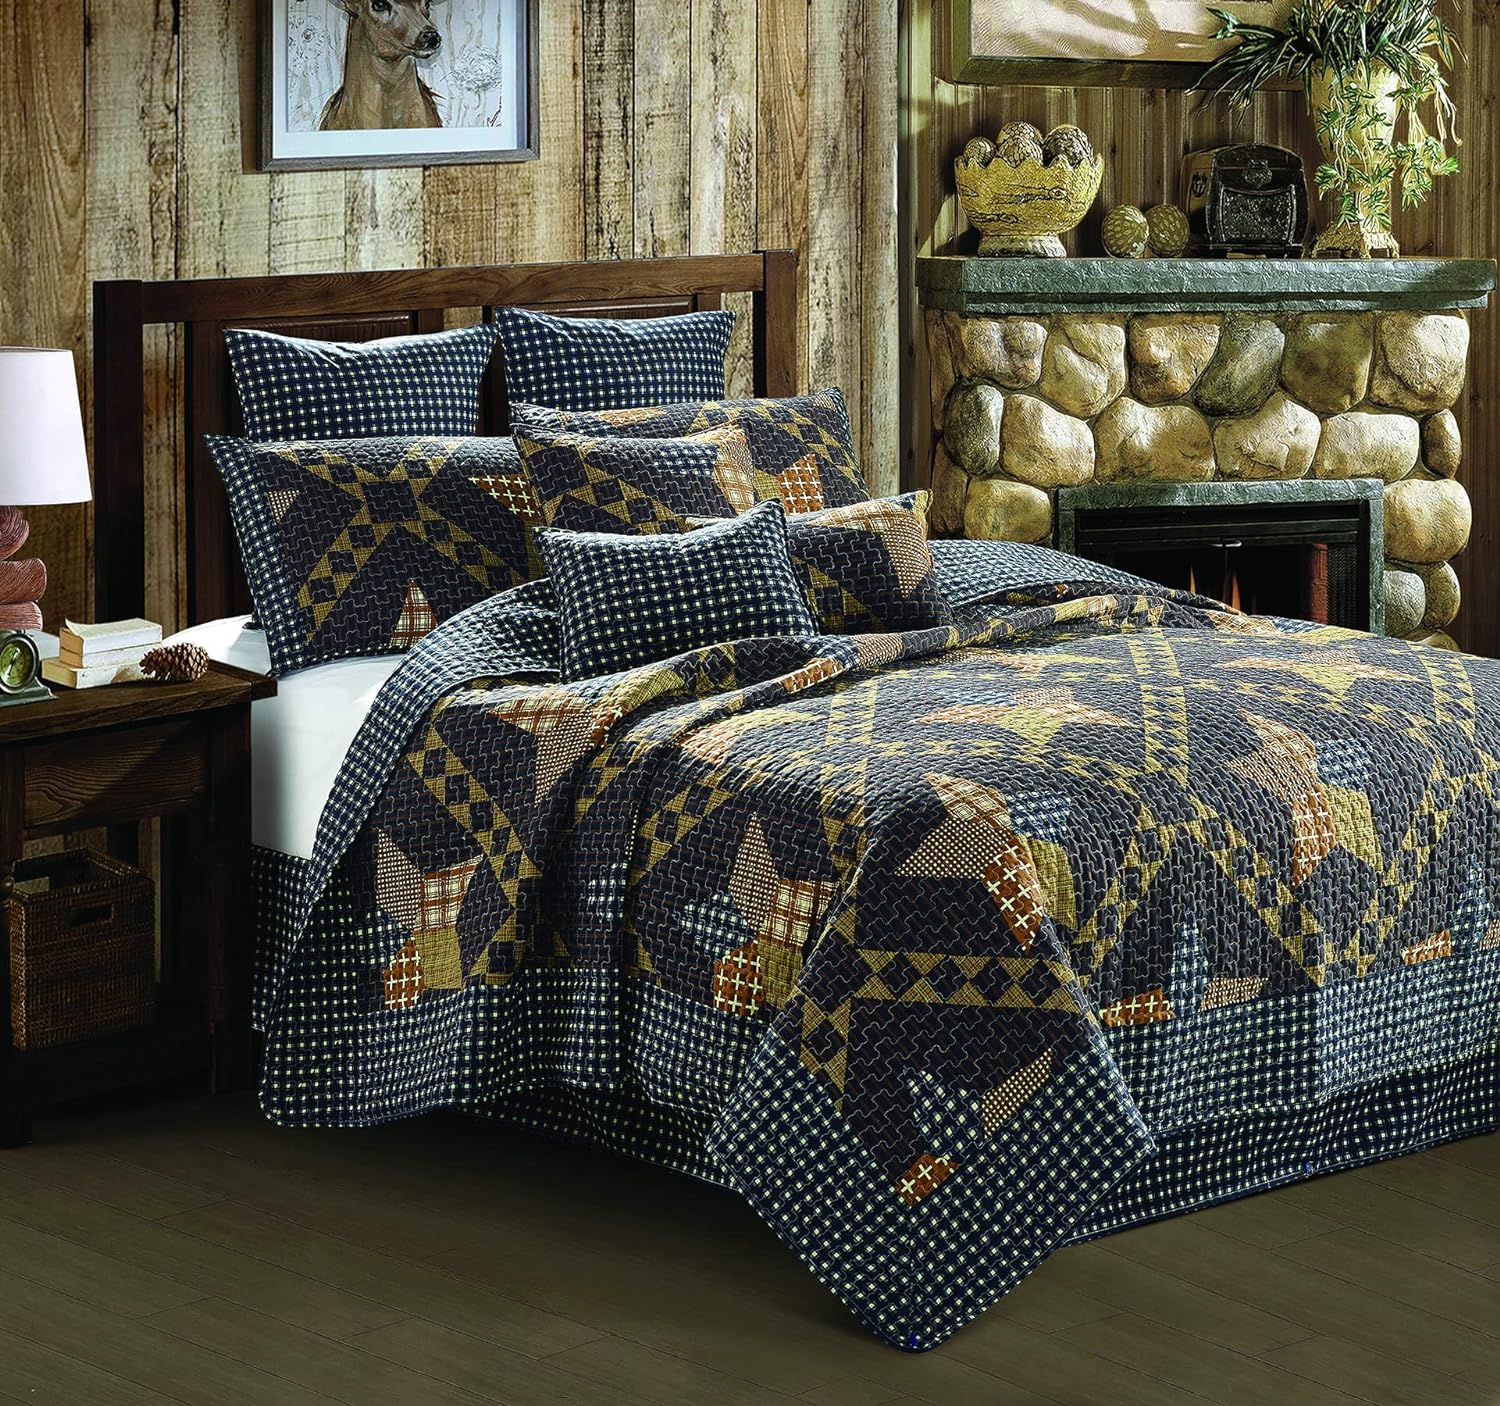 Virah Bella 3 Piece King Cabin Quilt Bedding Set - Paducah Star - Rustic Country Reversible Patchwork Comforter Set with Decorative Pillow Shams Black